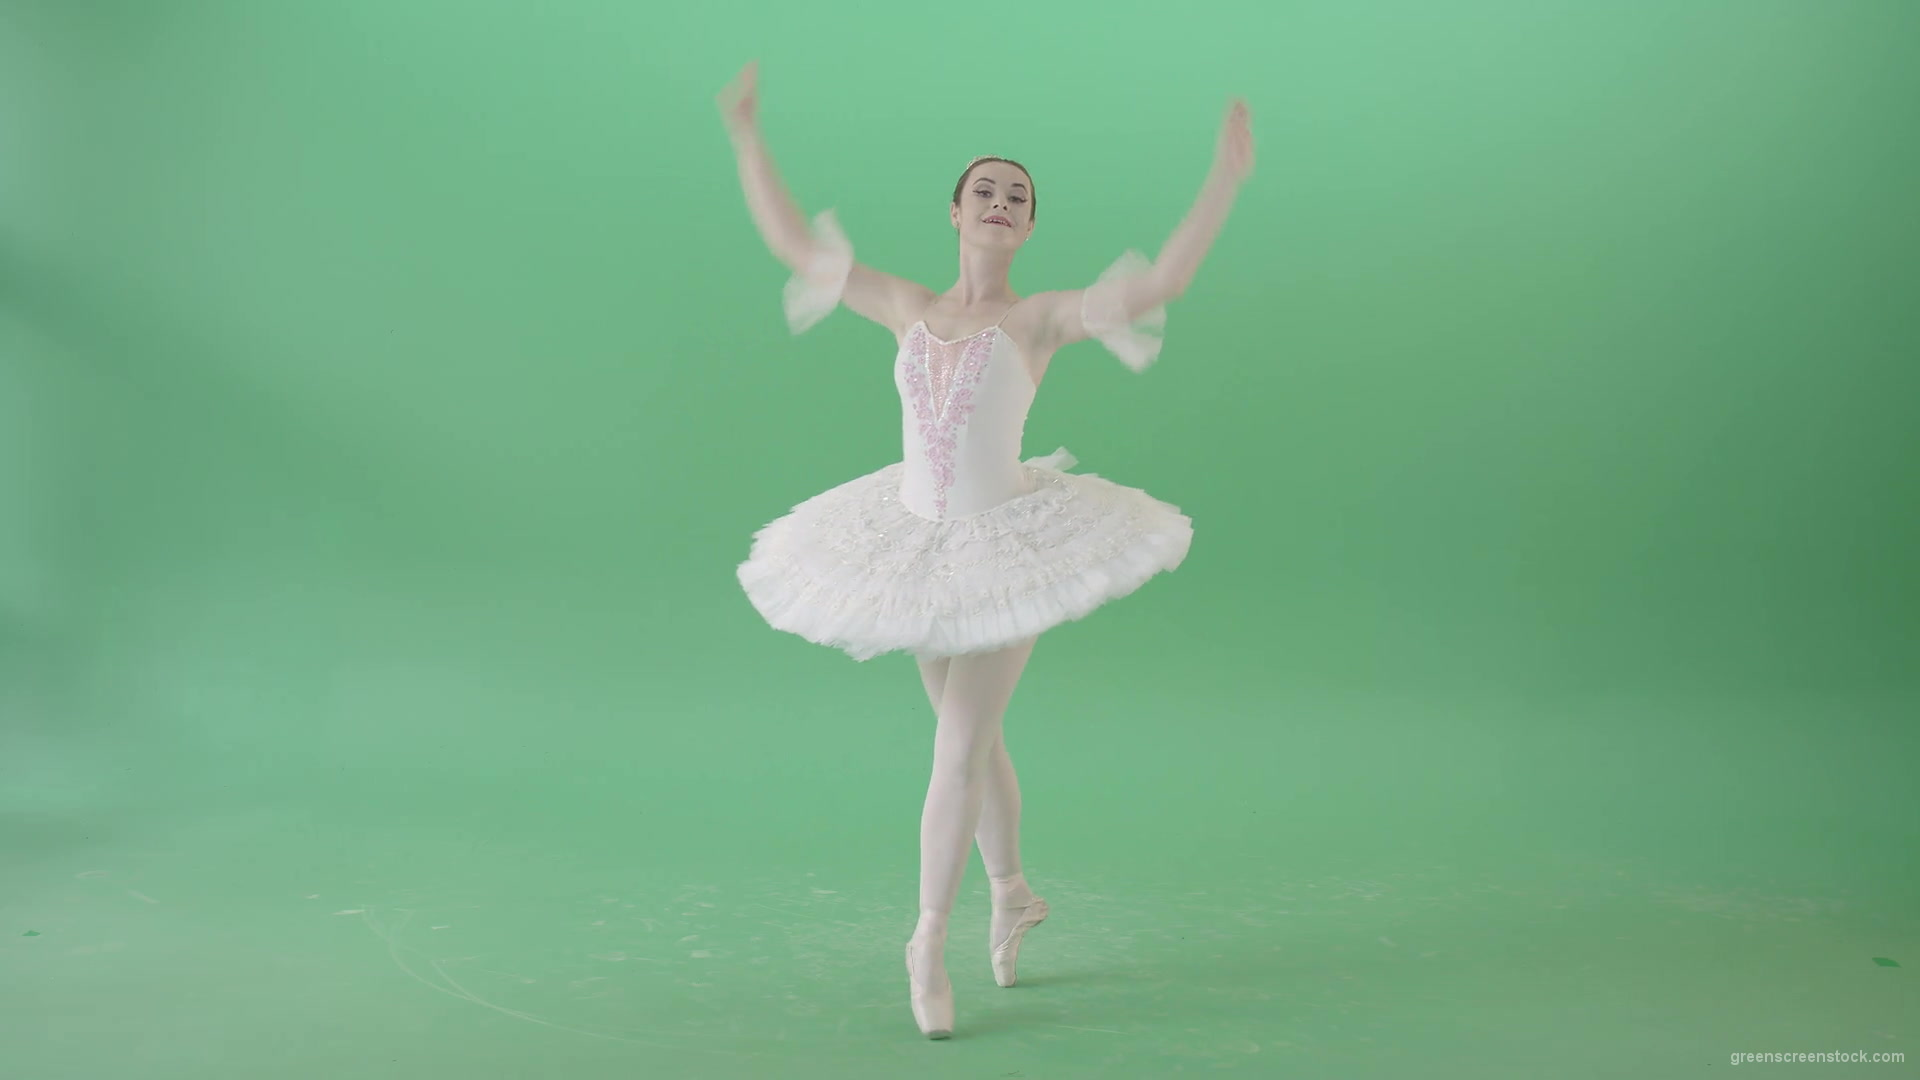 Flexibility-ballet-dancing-performance-girl-dancing-Classical-adagio-opera-on-green-screen-4K-Video-footage-1920_009 Green Screen Stock